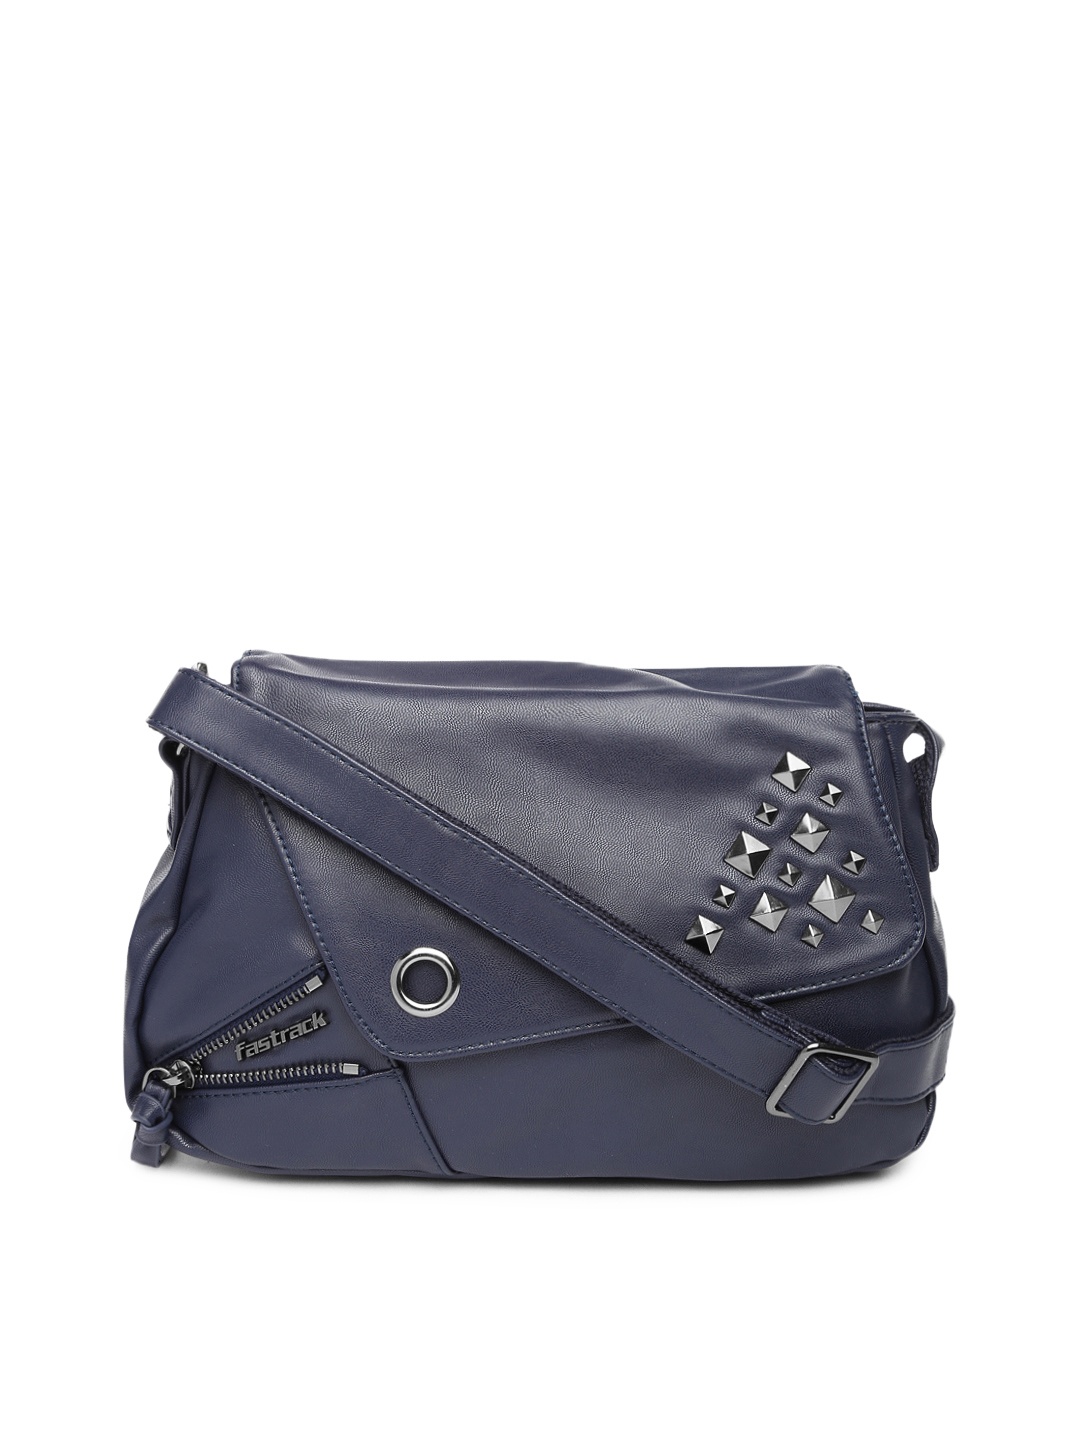 Myntra Fastrack Navy Sling Bag 439383 | Buy Myntra Fastrack Handbags at best price online. All ...